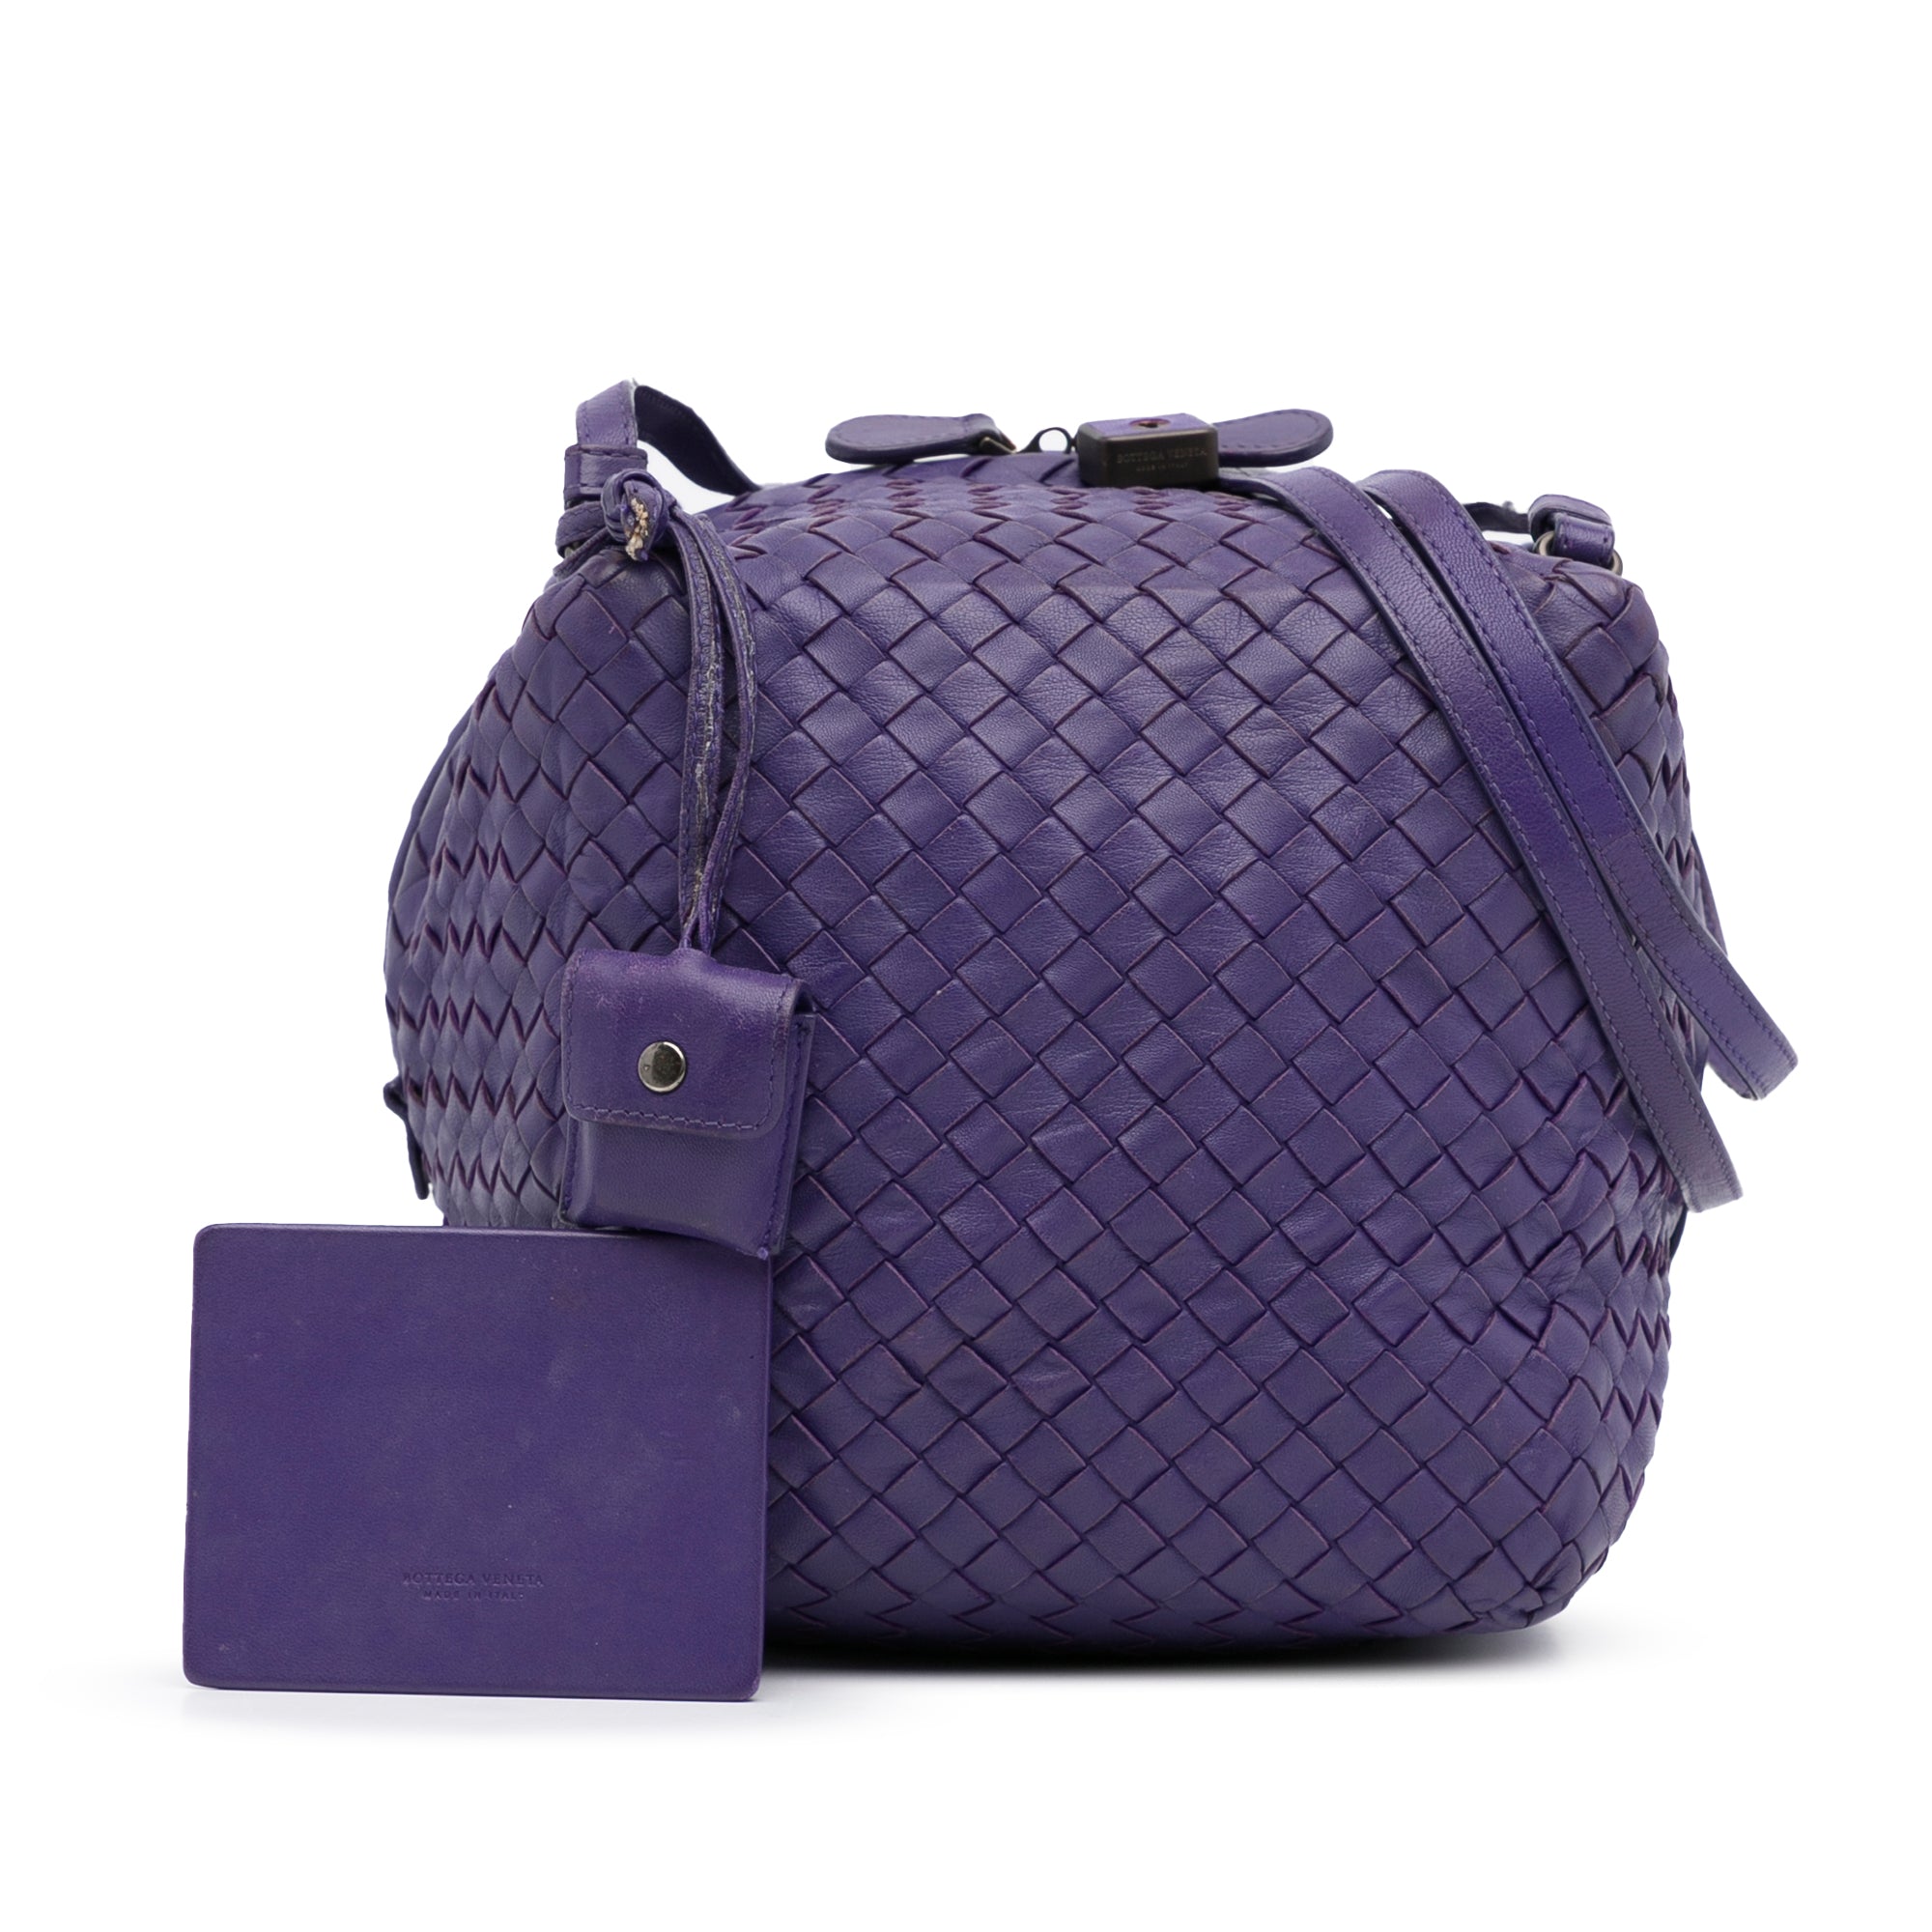 Bottega Veneta Small Point Top Handle Bag in Lavender